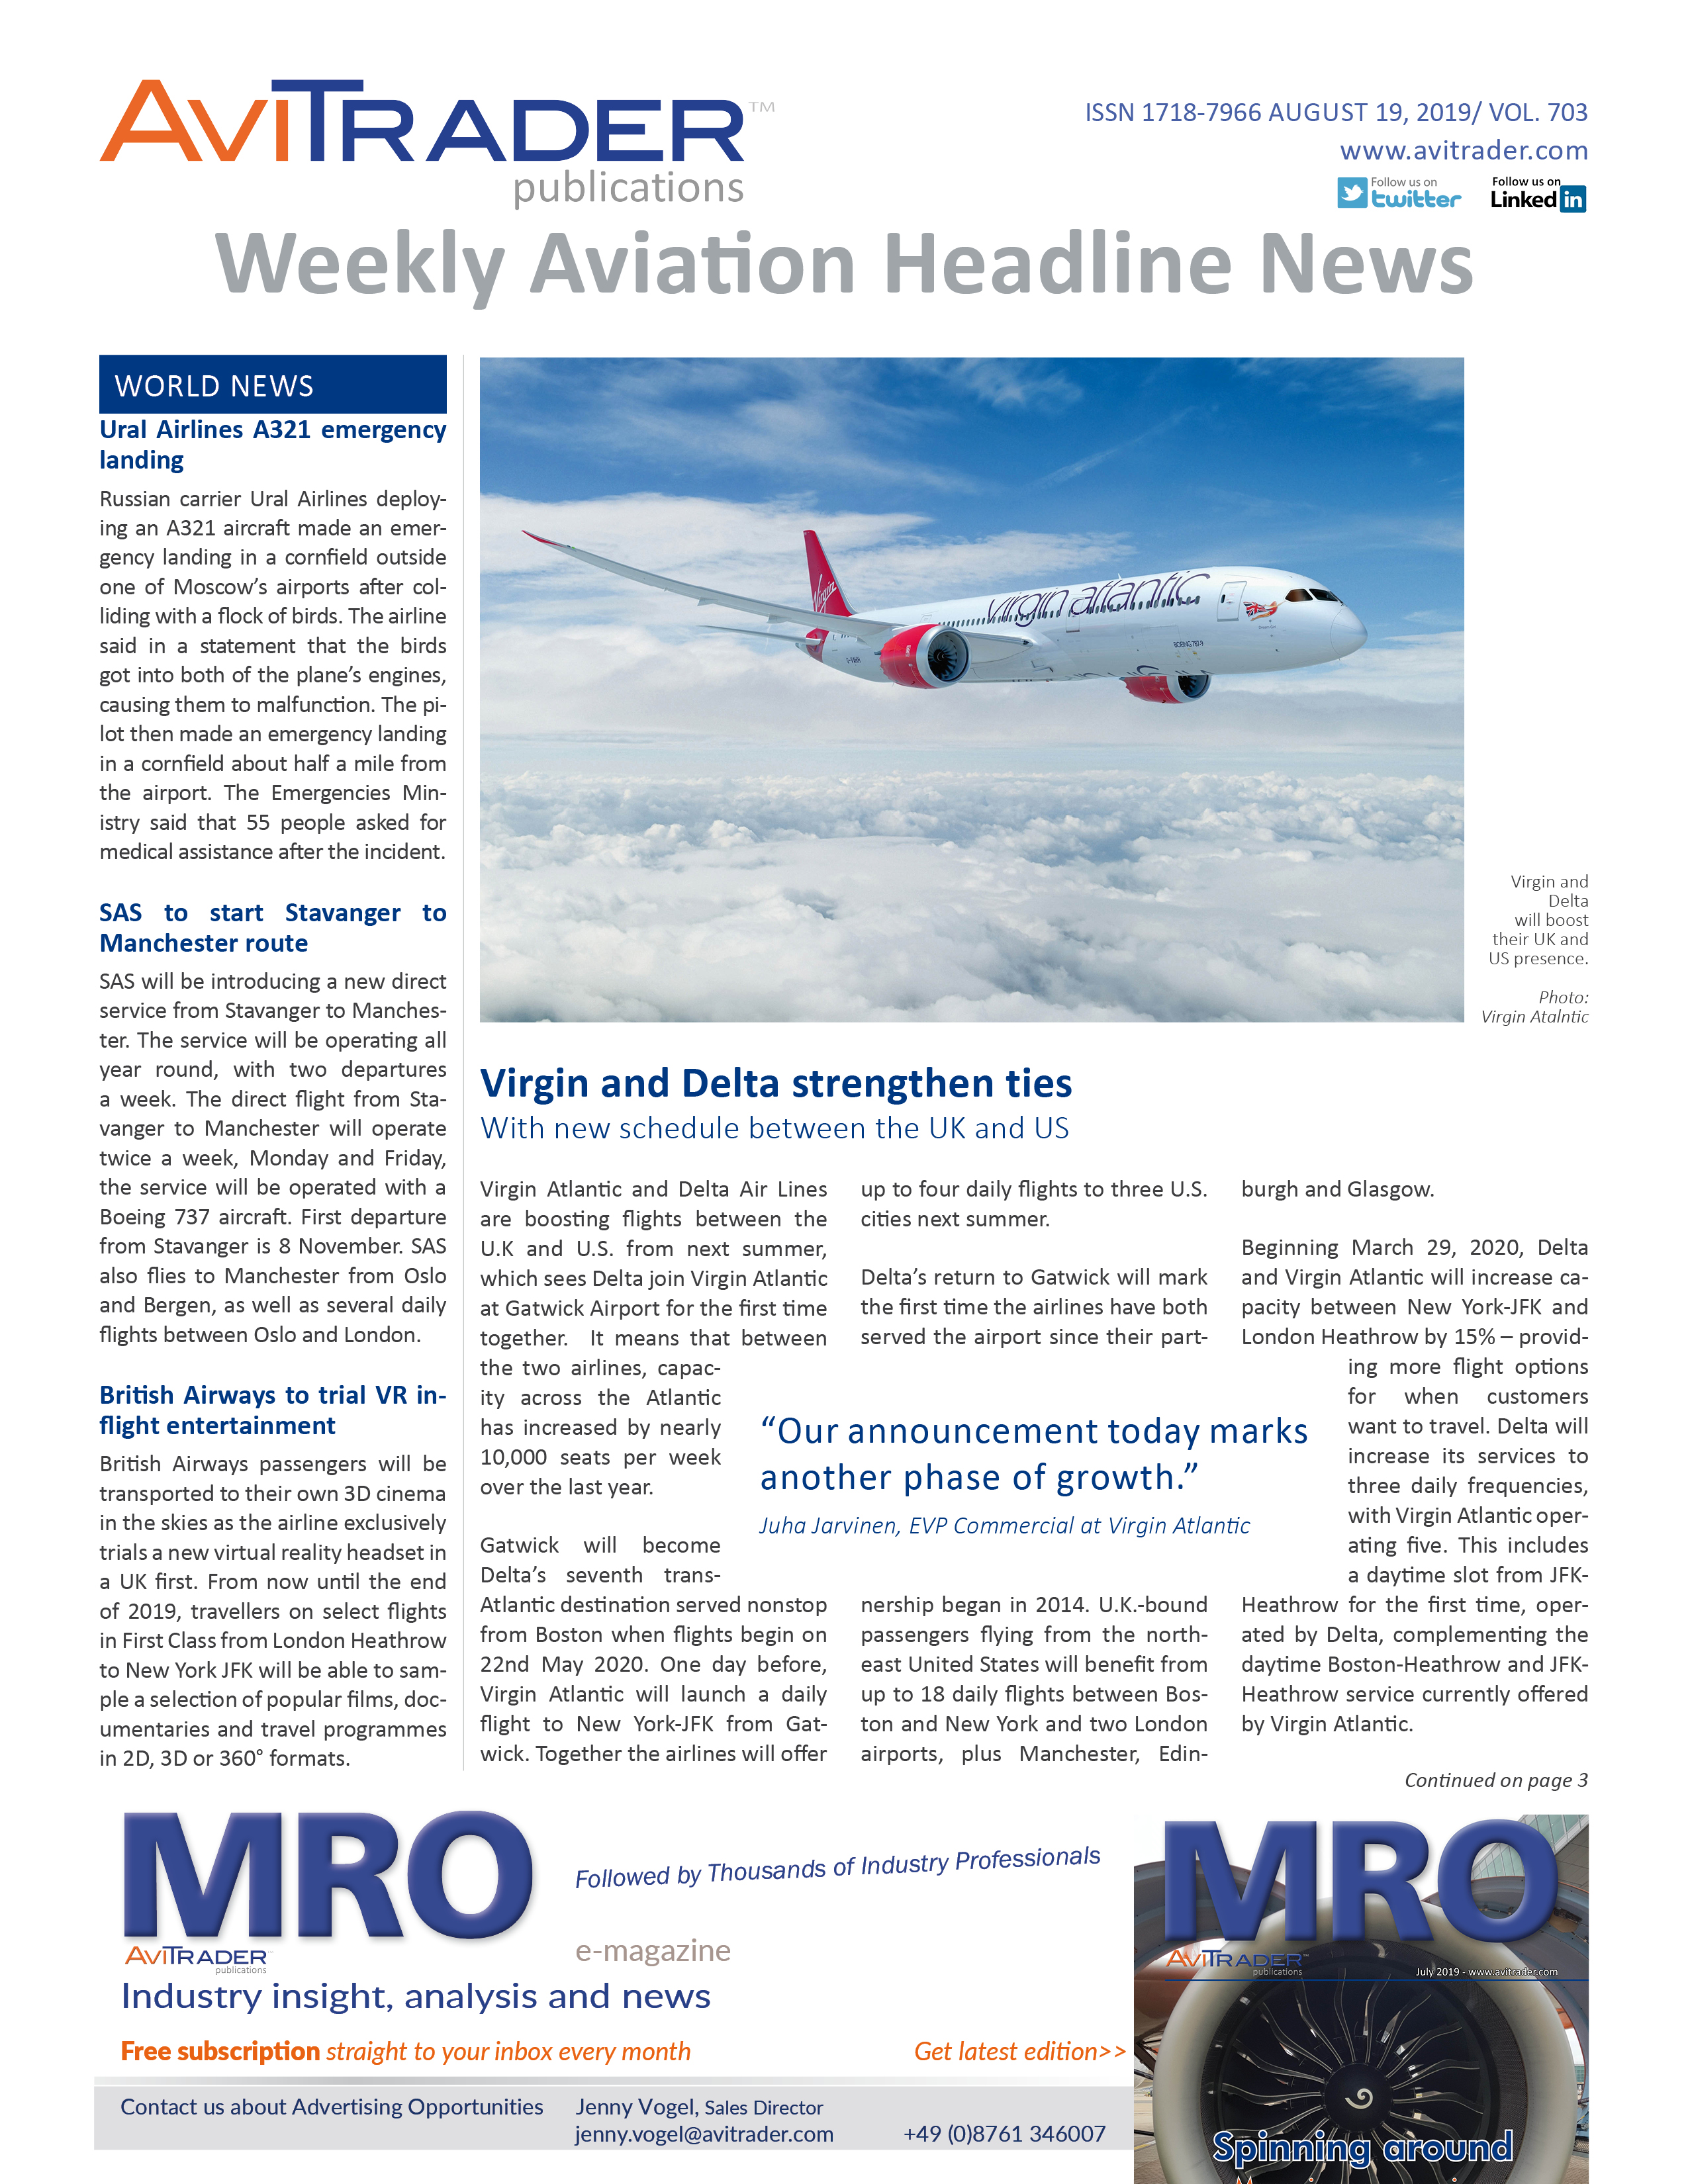 AviTrader_Weekly_Headline_News_2019-06-17_COVER